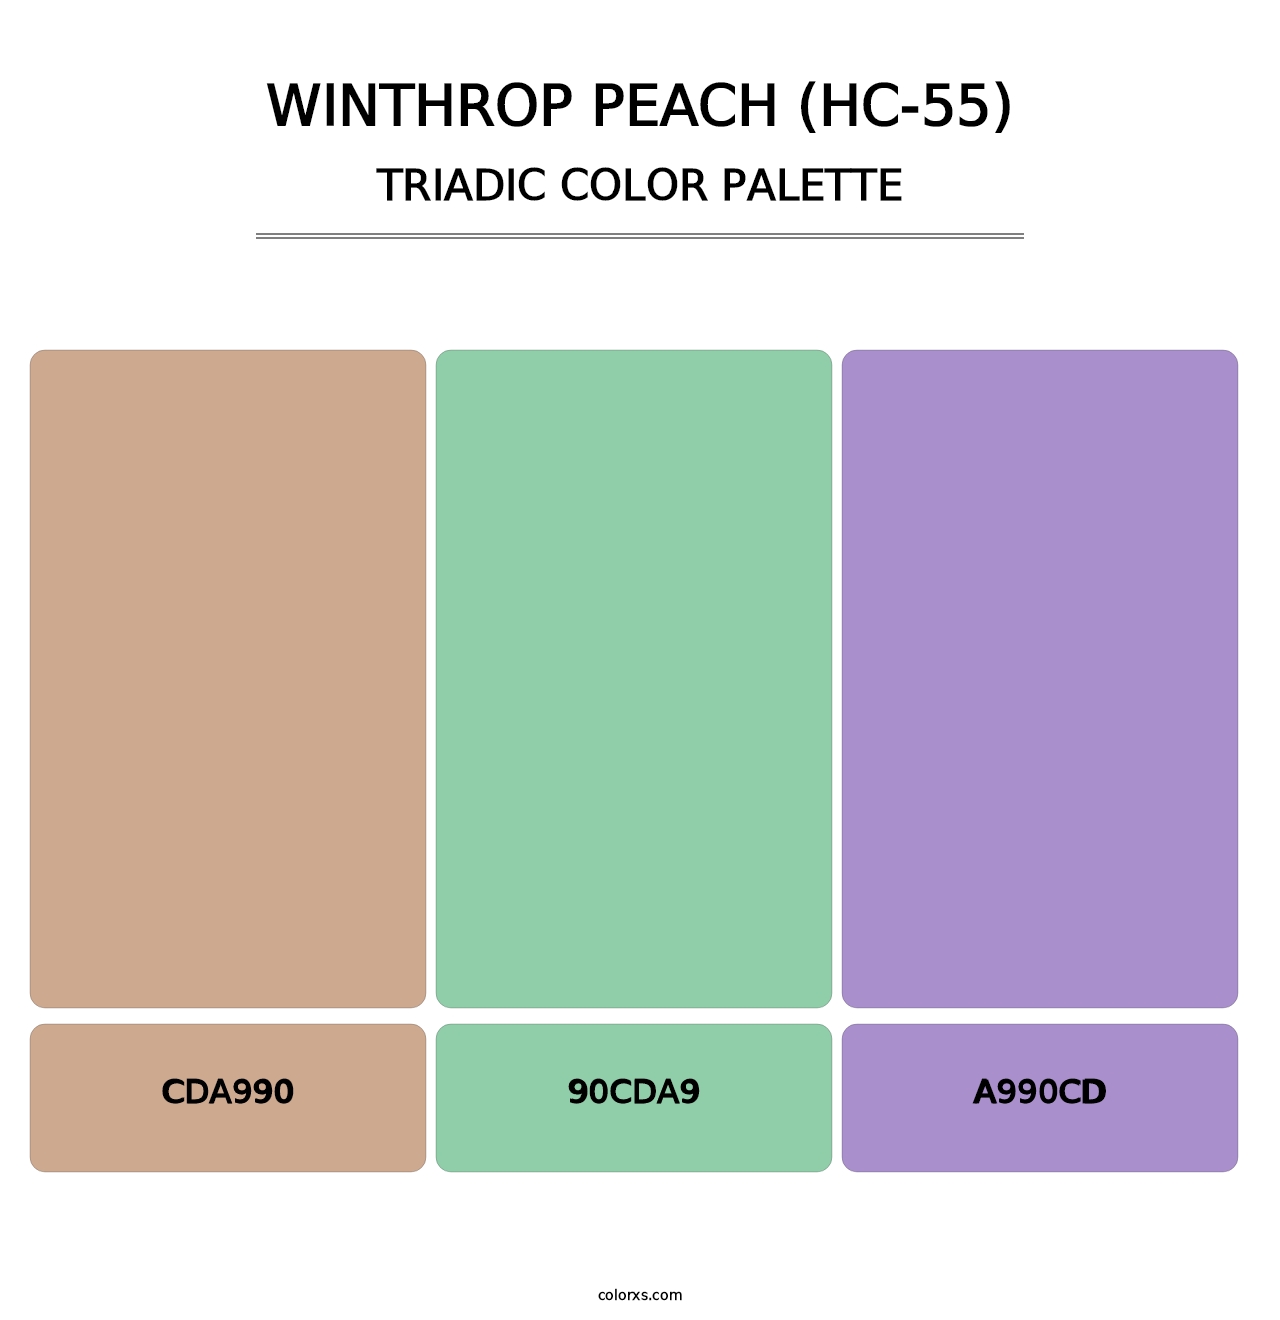 Winthrop Peach (HC-55) - Triadic Color Palette